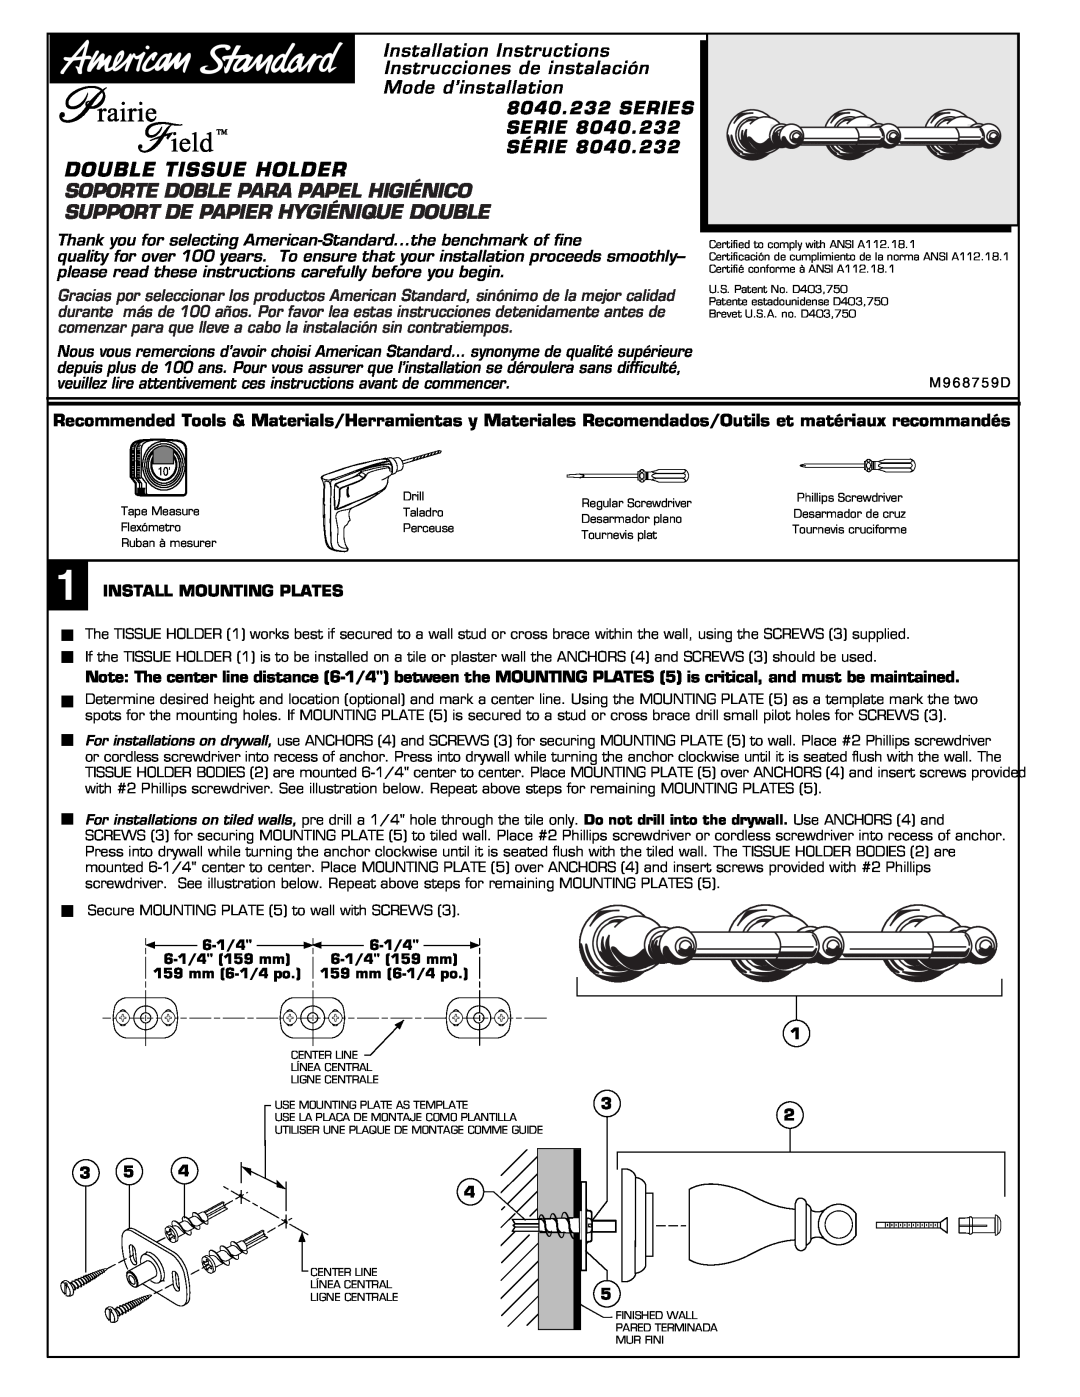 American Standard 8040.232 Series installation instructions Double Tissue Holder, Soporte Doble Para Papel Higiénico 